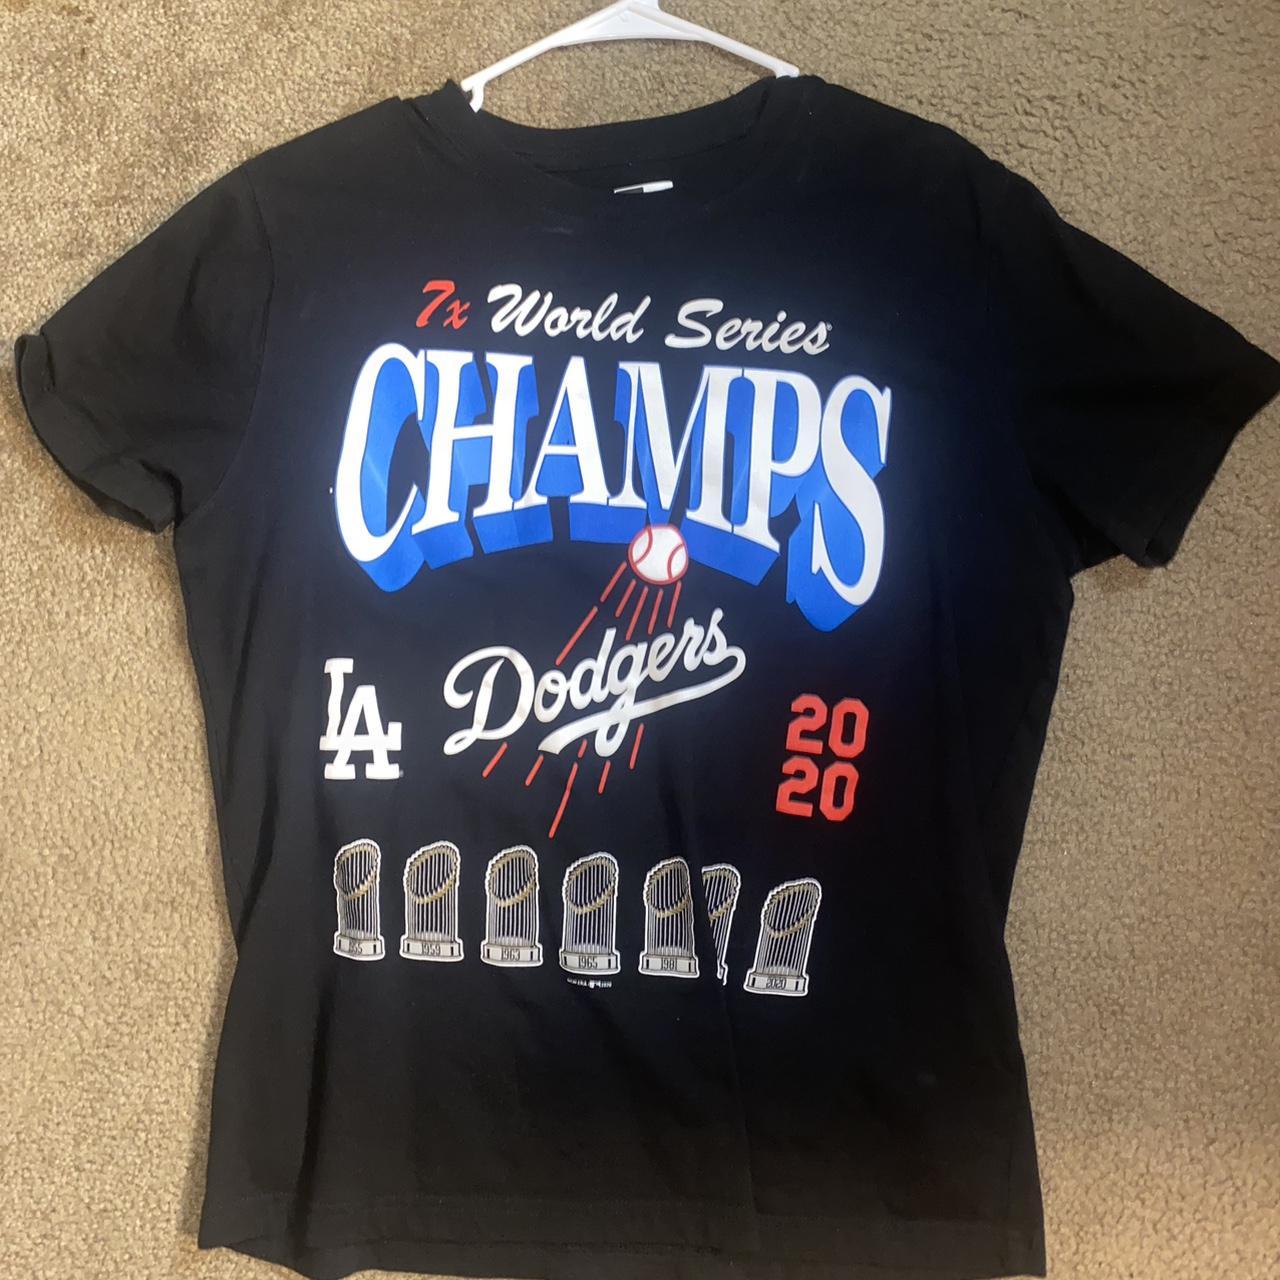 New Era LA Dodgers t-shirt in black